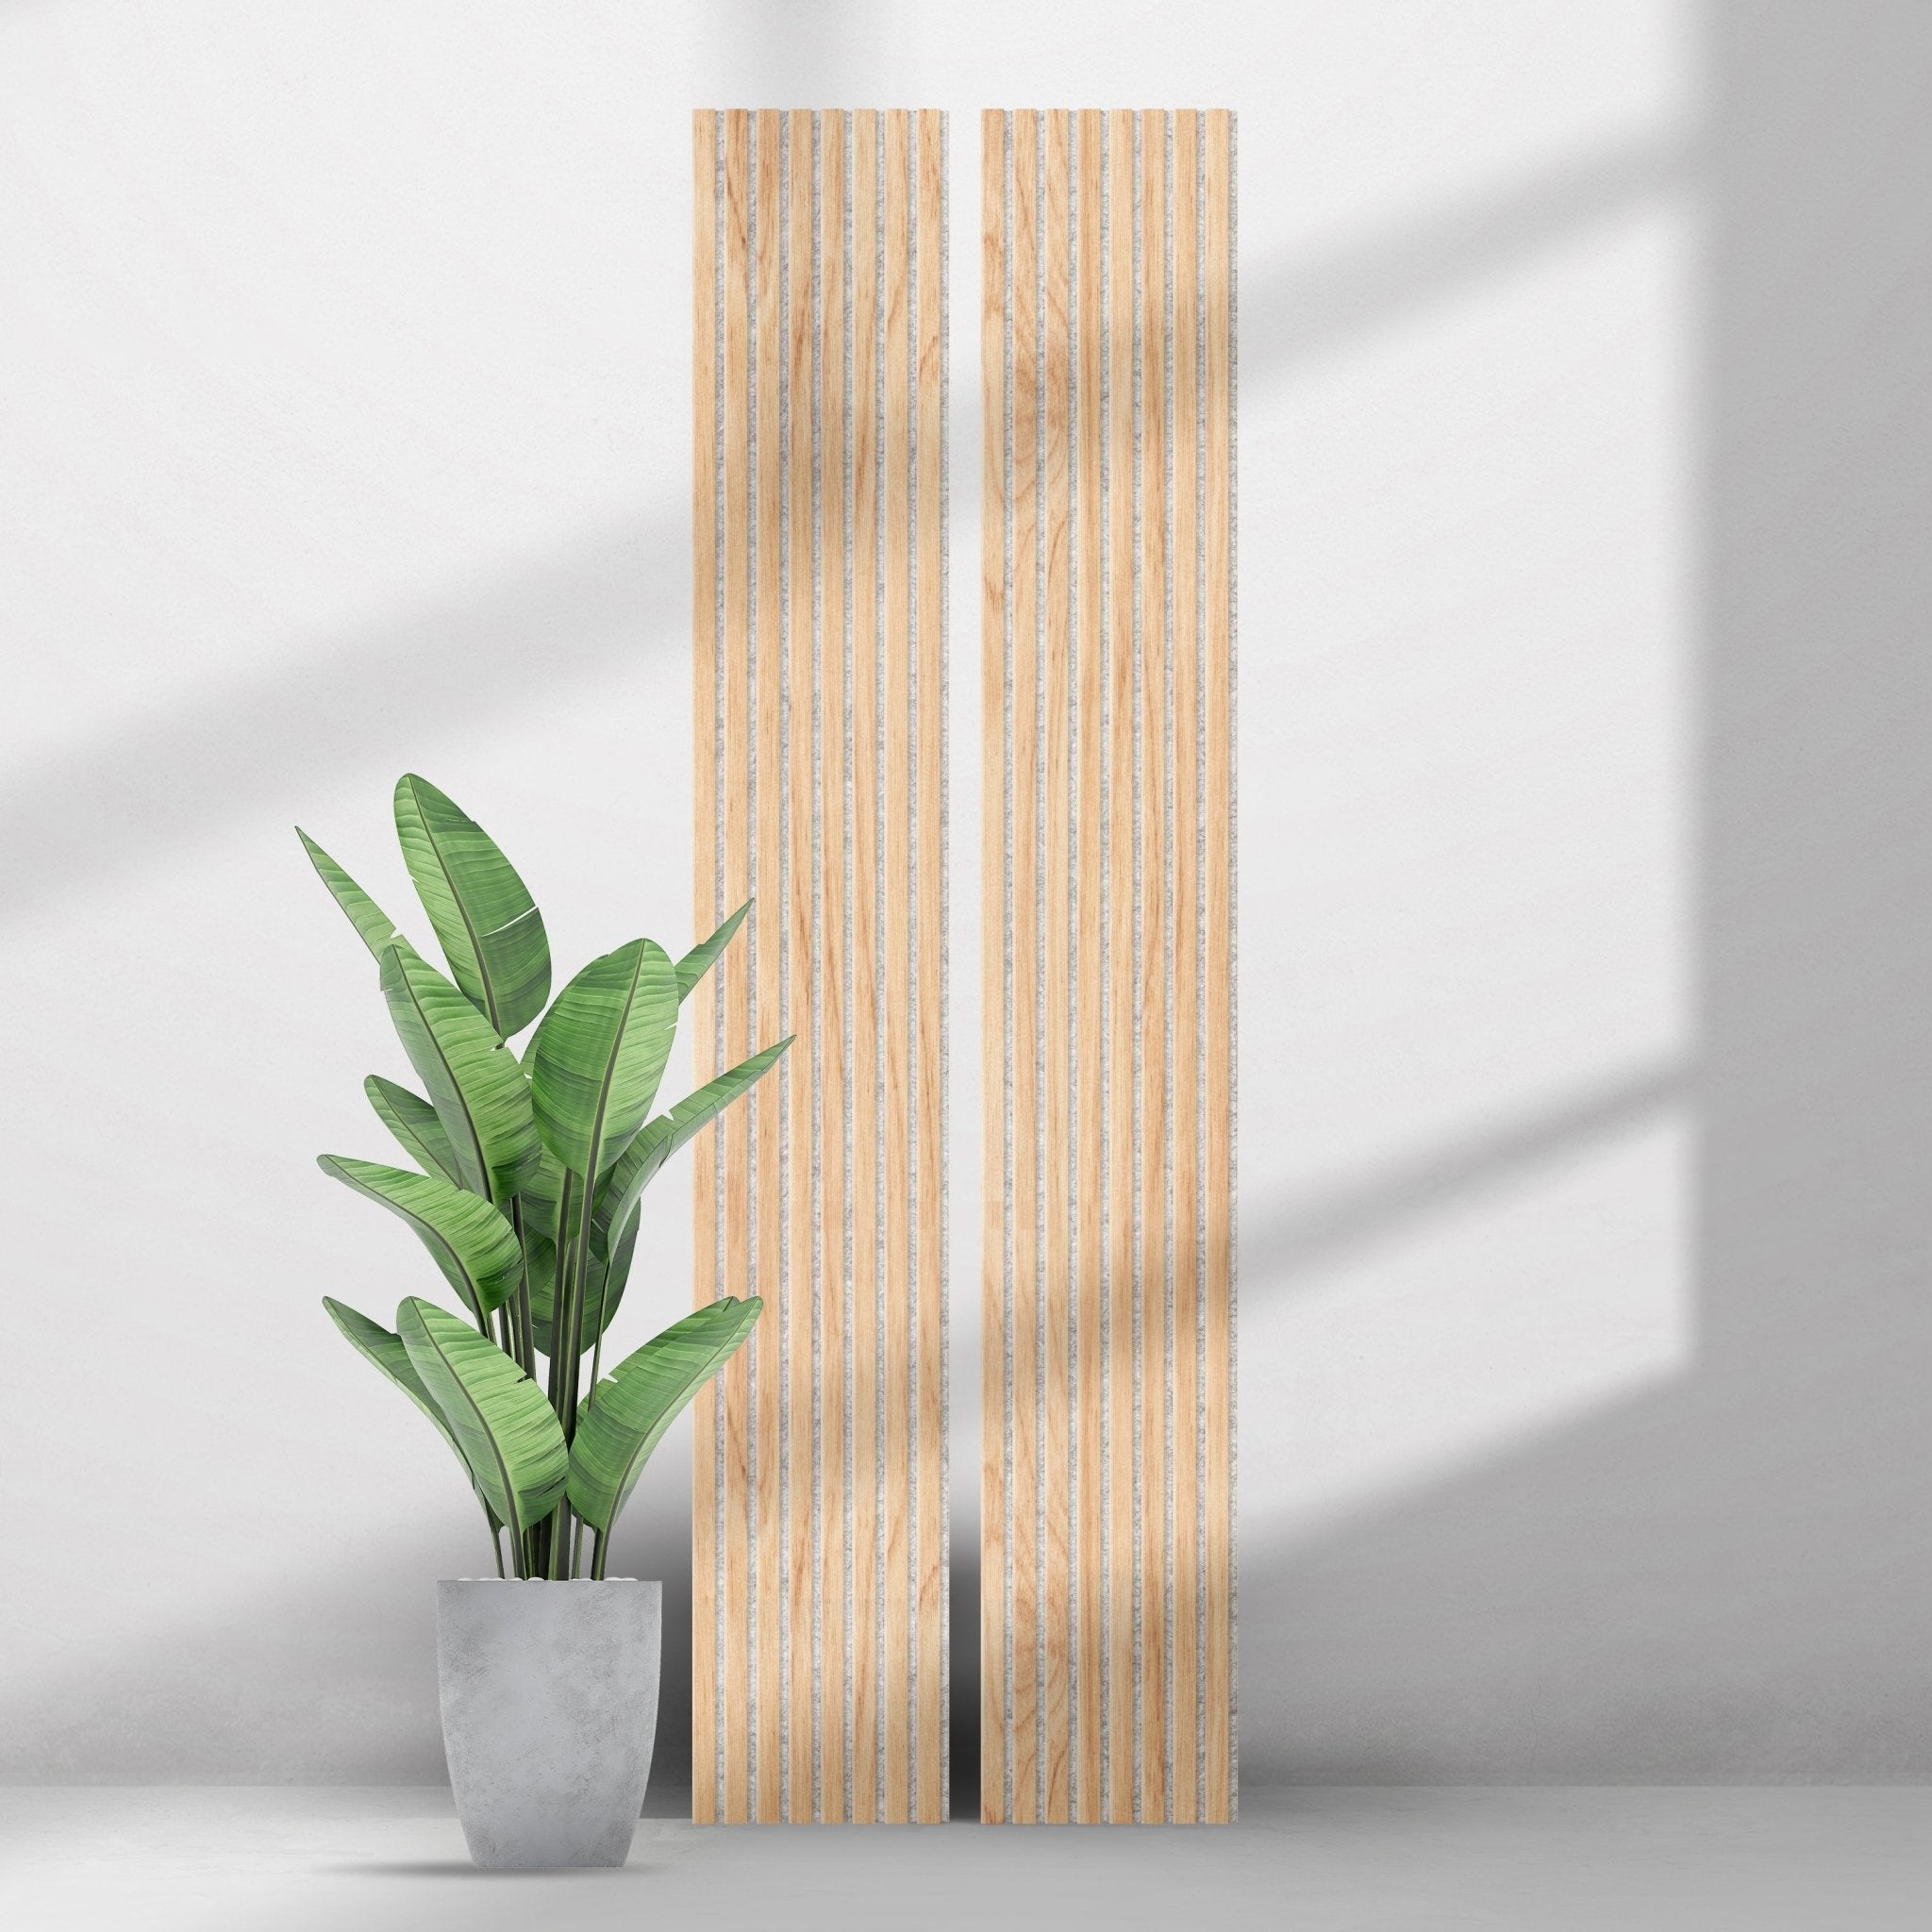 Wood Slat Acoustic Panel in Natural White Oak, Grey Felt - Slats.co